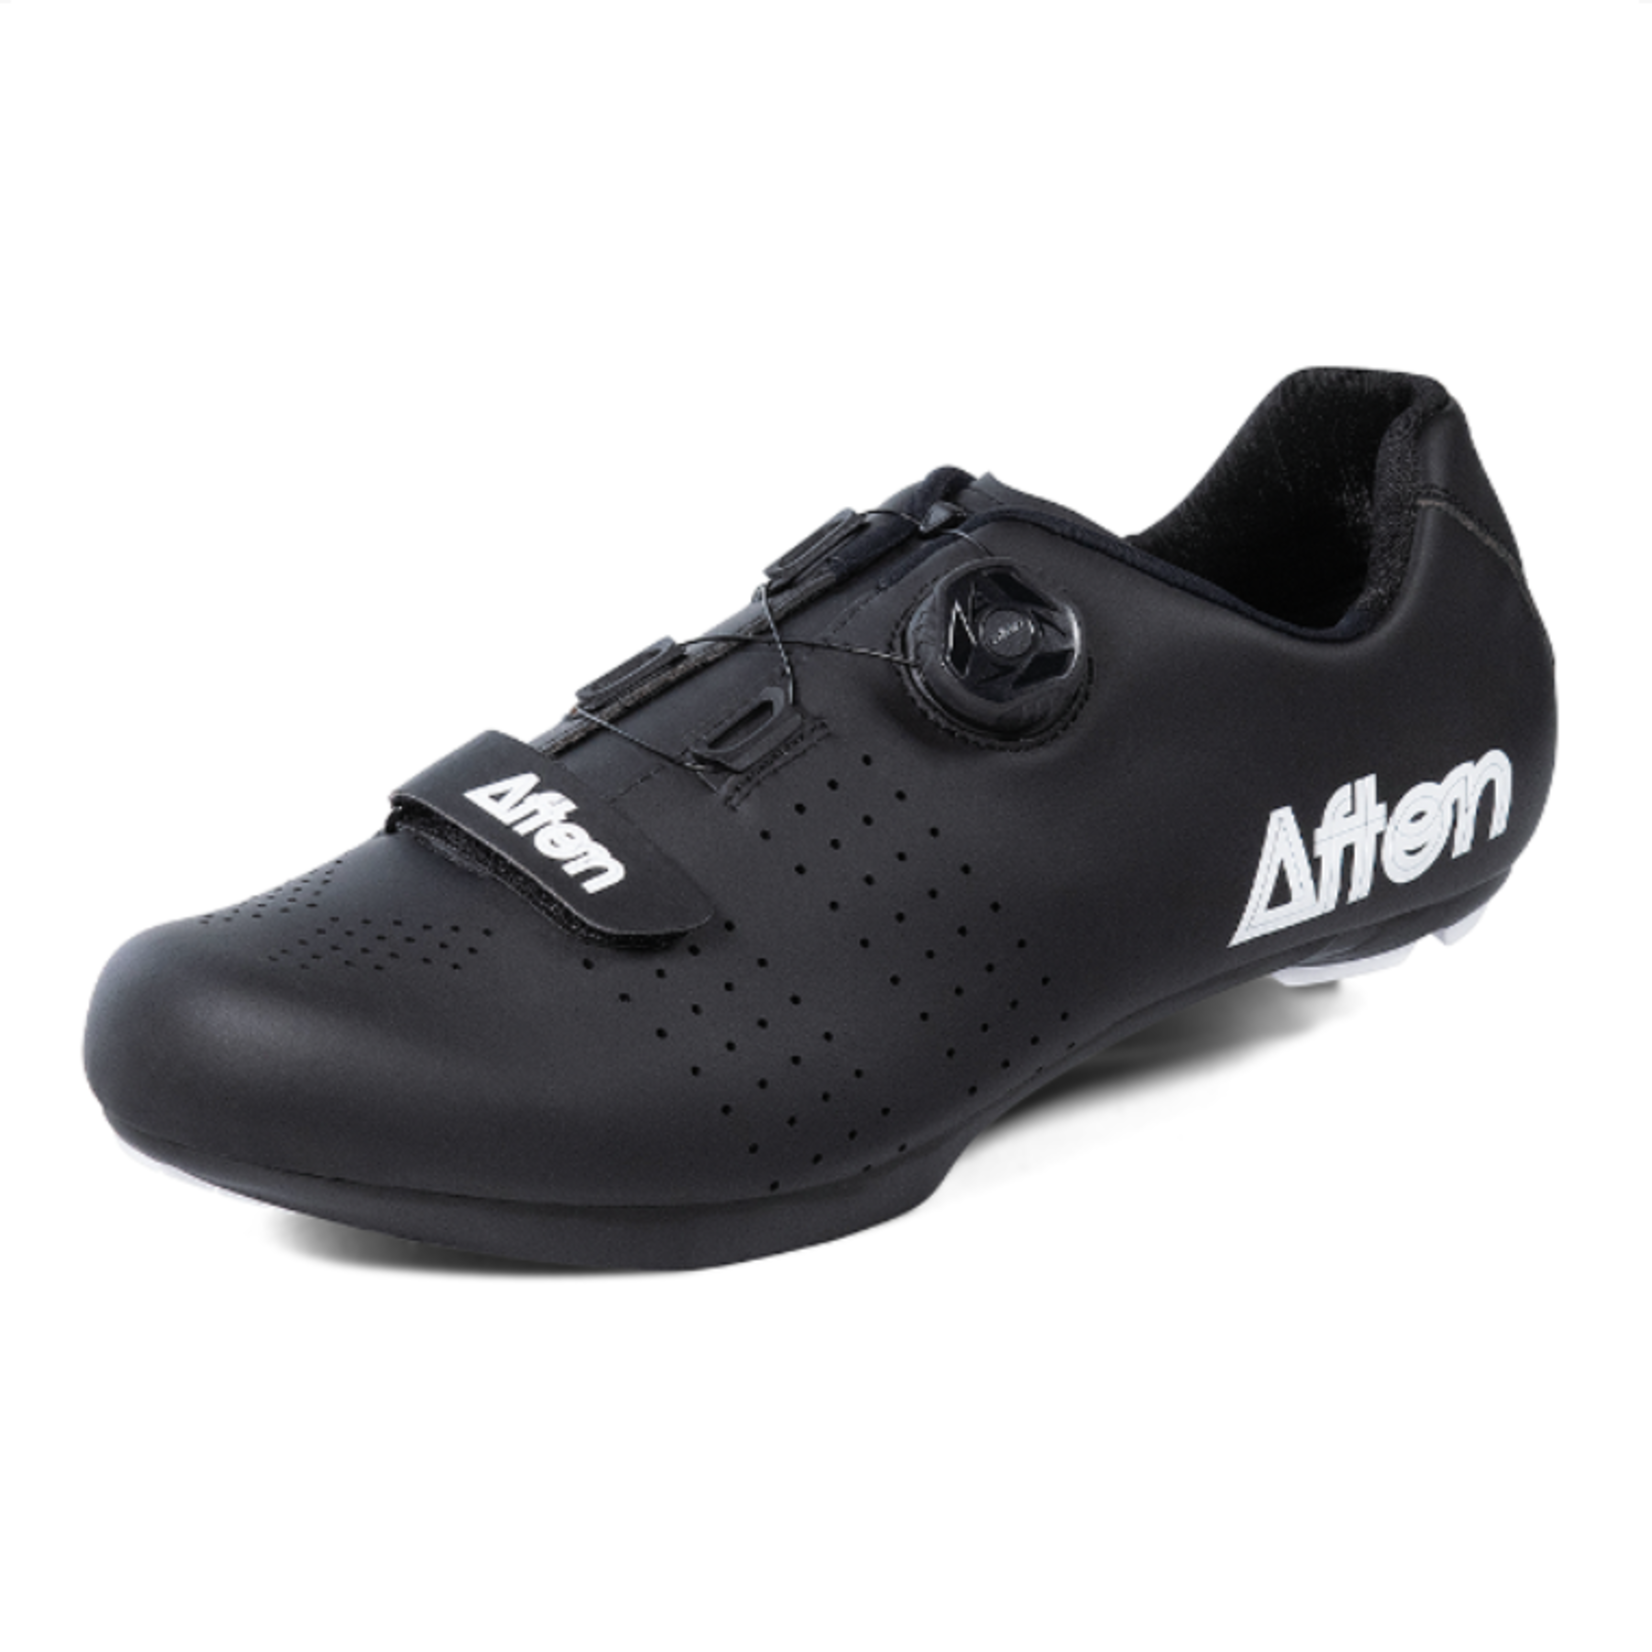 AFTON Gravel Shoes - ROYCE - Black/White, Size 46